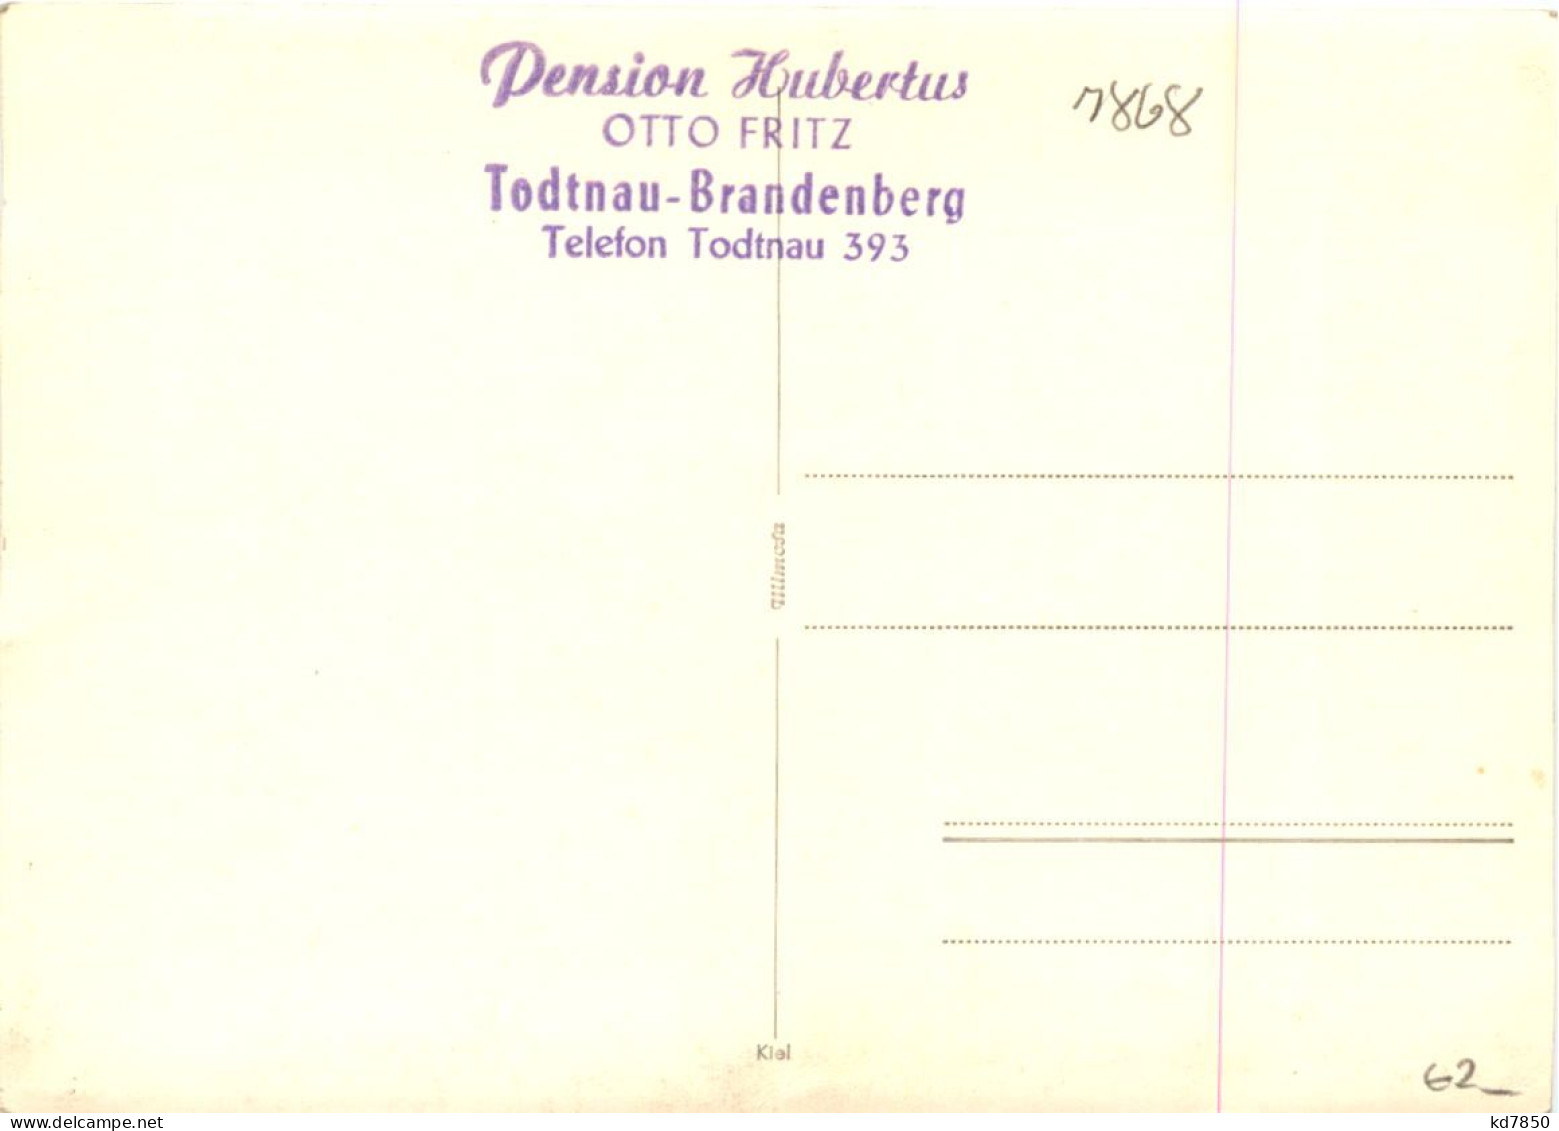 Todtnau-Brandenberg - PEnsion Hubertus - Todtnau